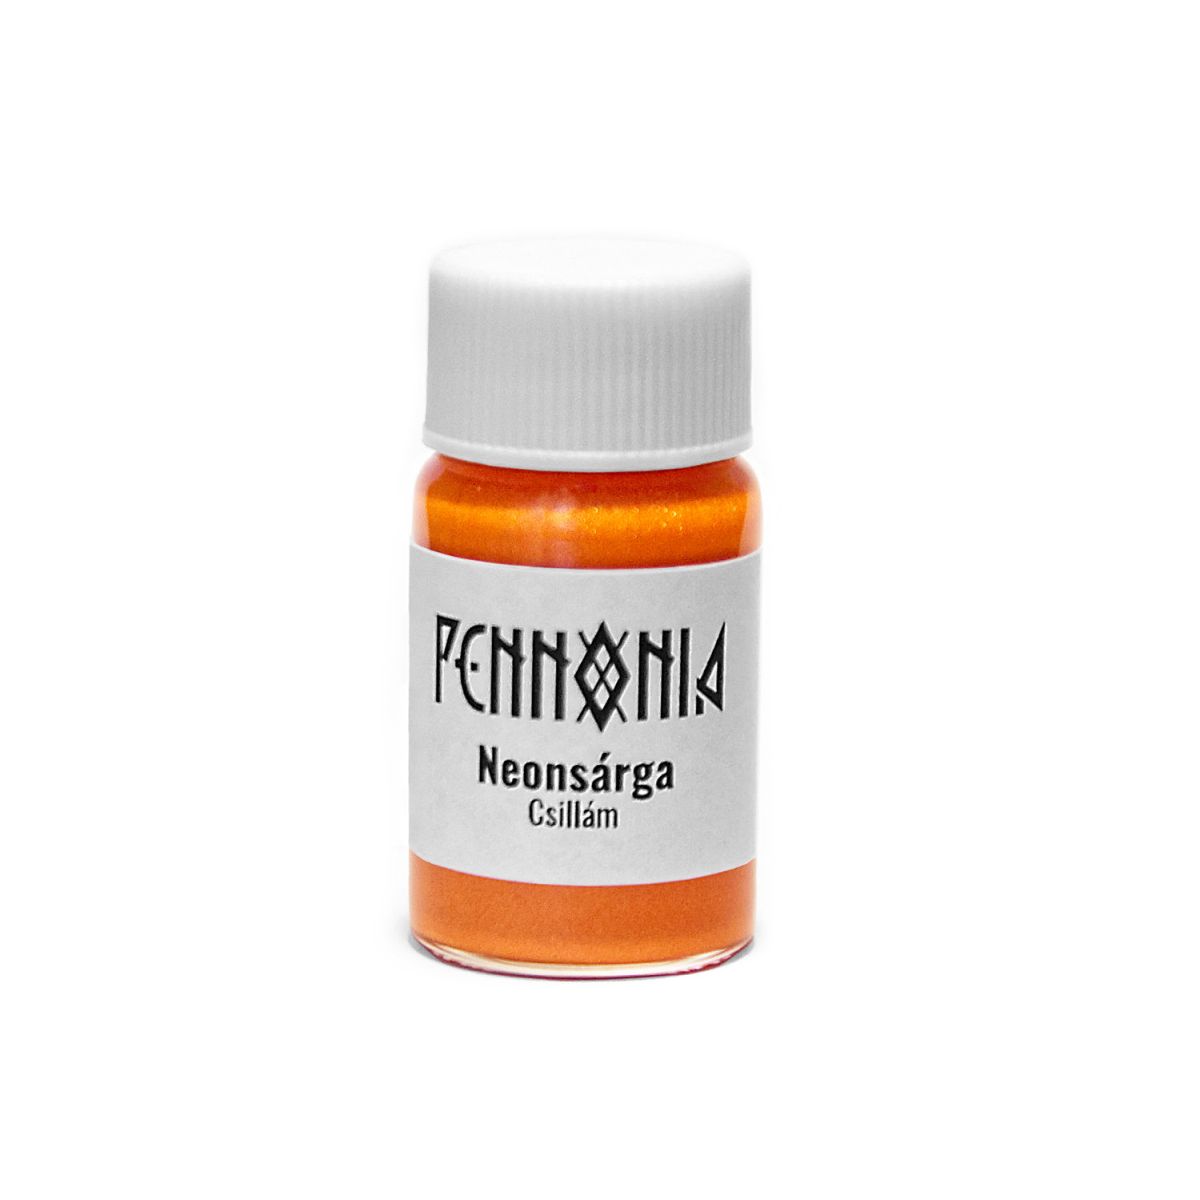 Pennonia Shimmerzusatz - Neonsarga